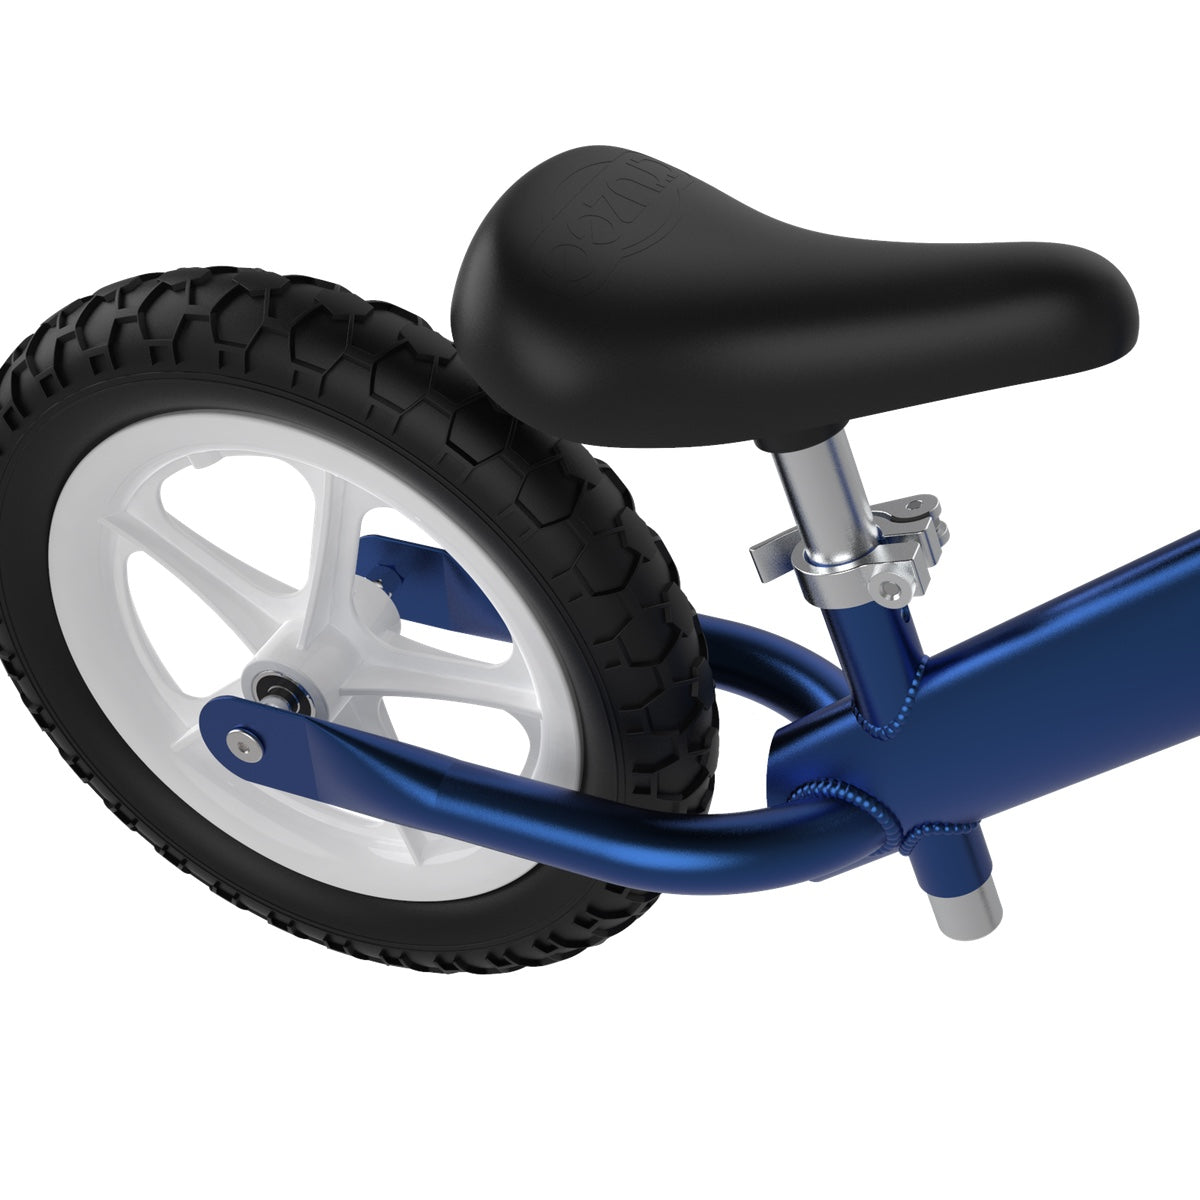 cruzee-kids-bike-balance-blue